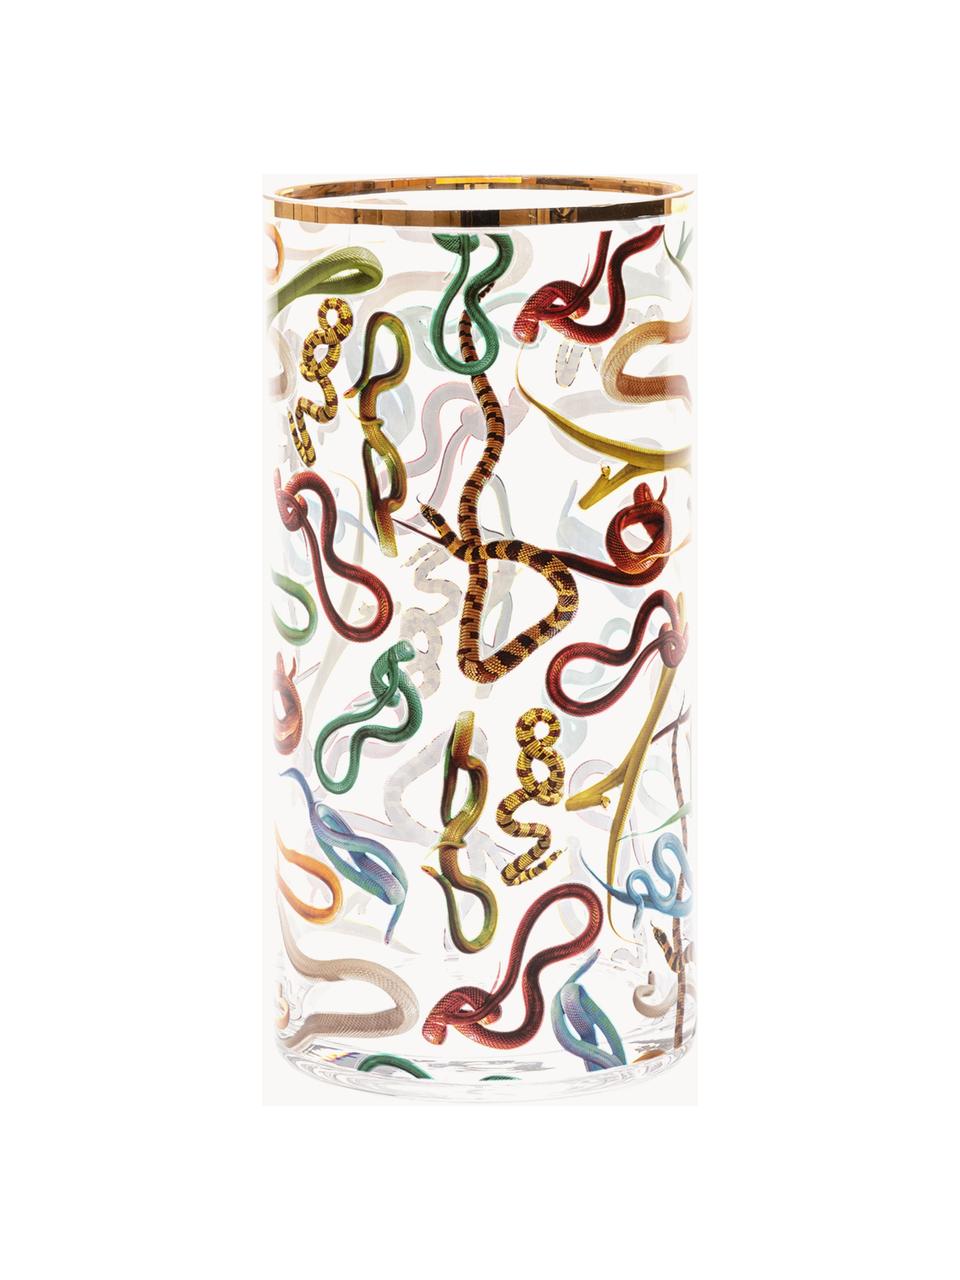 Glas-Vase Snakes, H 30 cm, Vase: Glas, Rand: Gold, Snakes, Ø 15 x H 30 cm